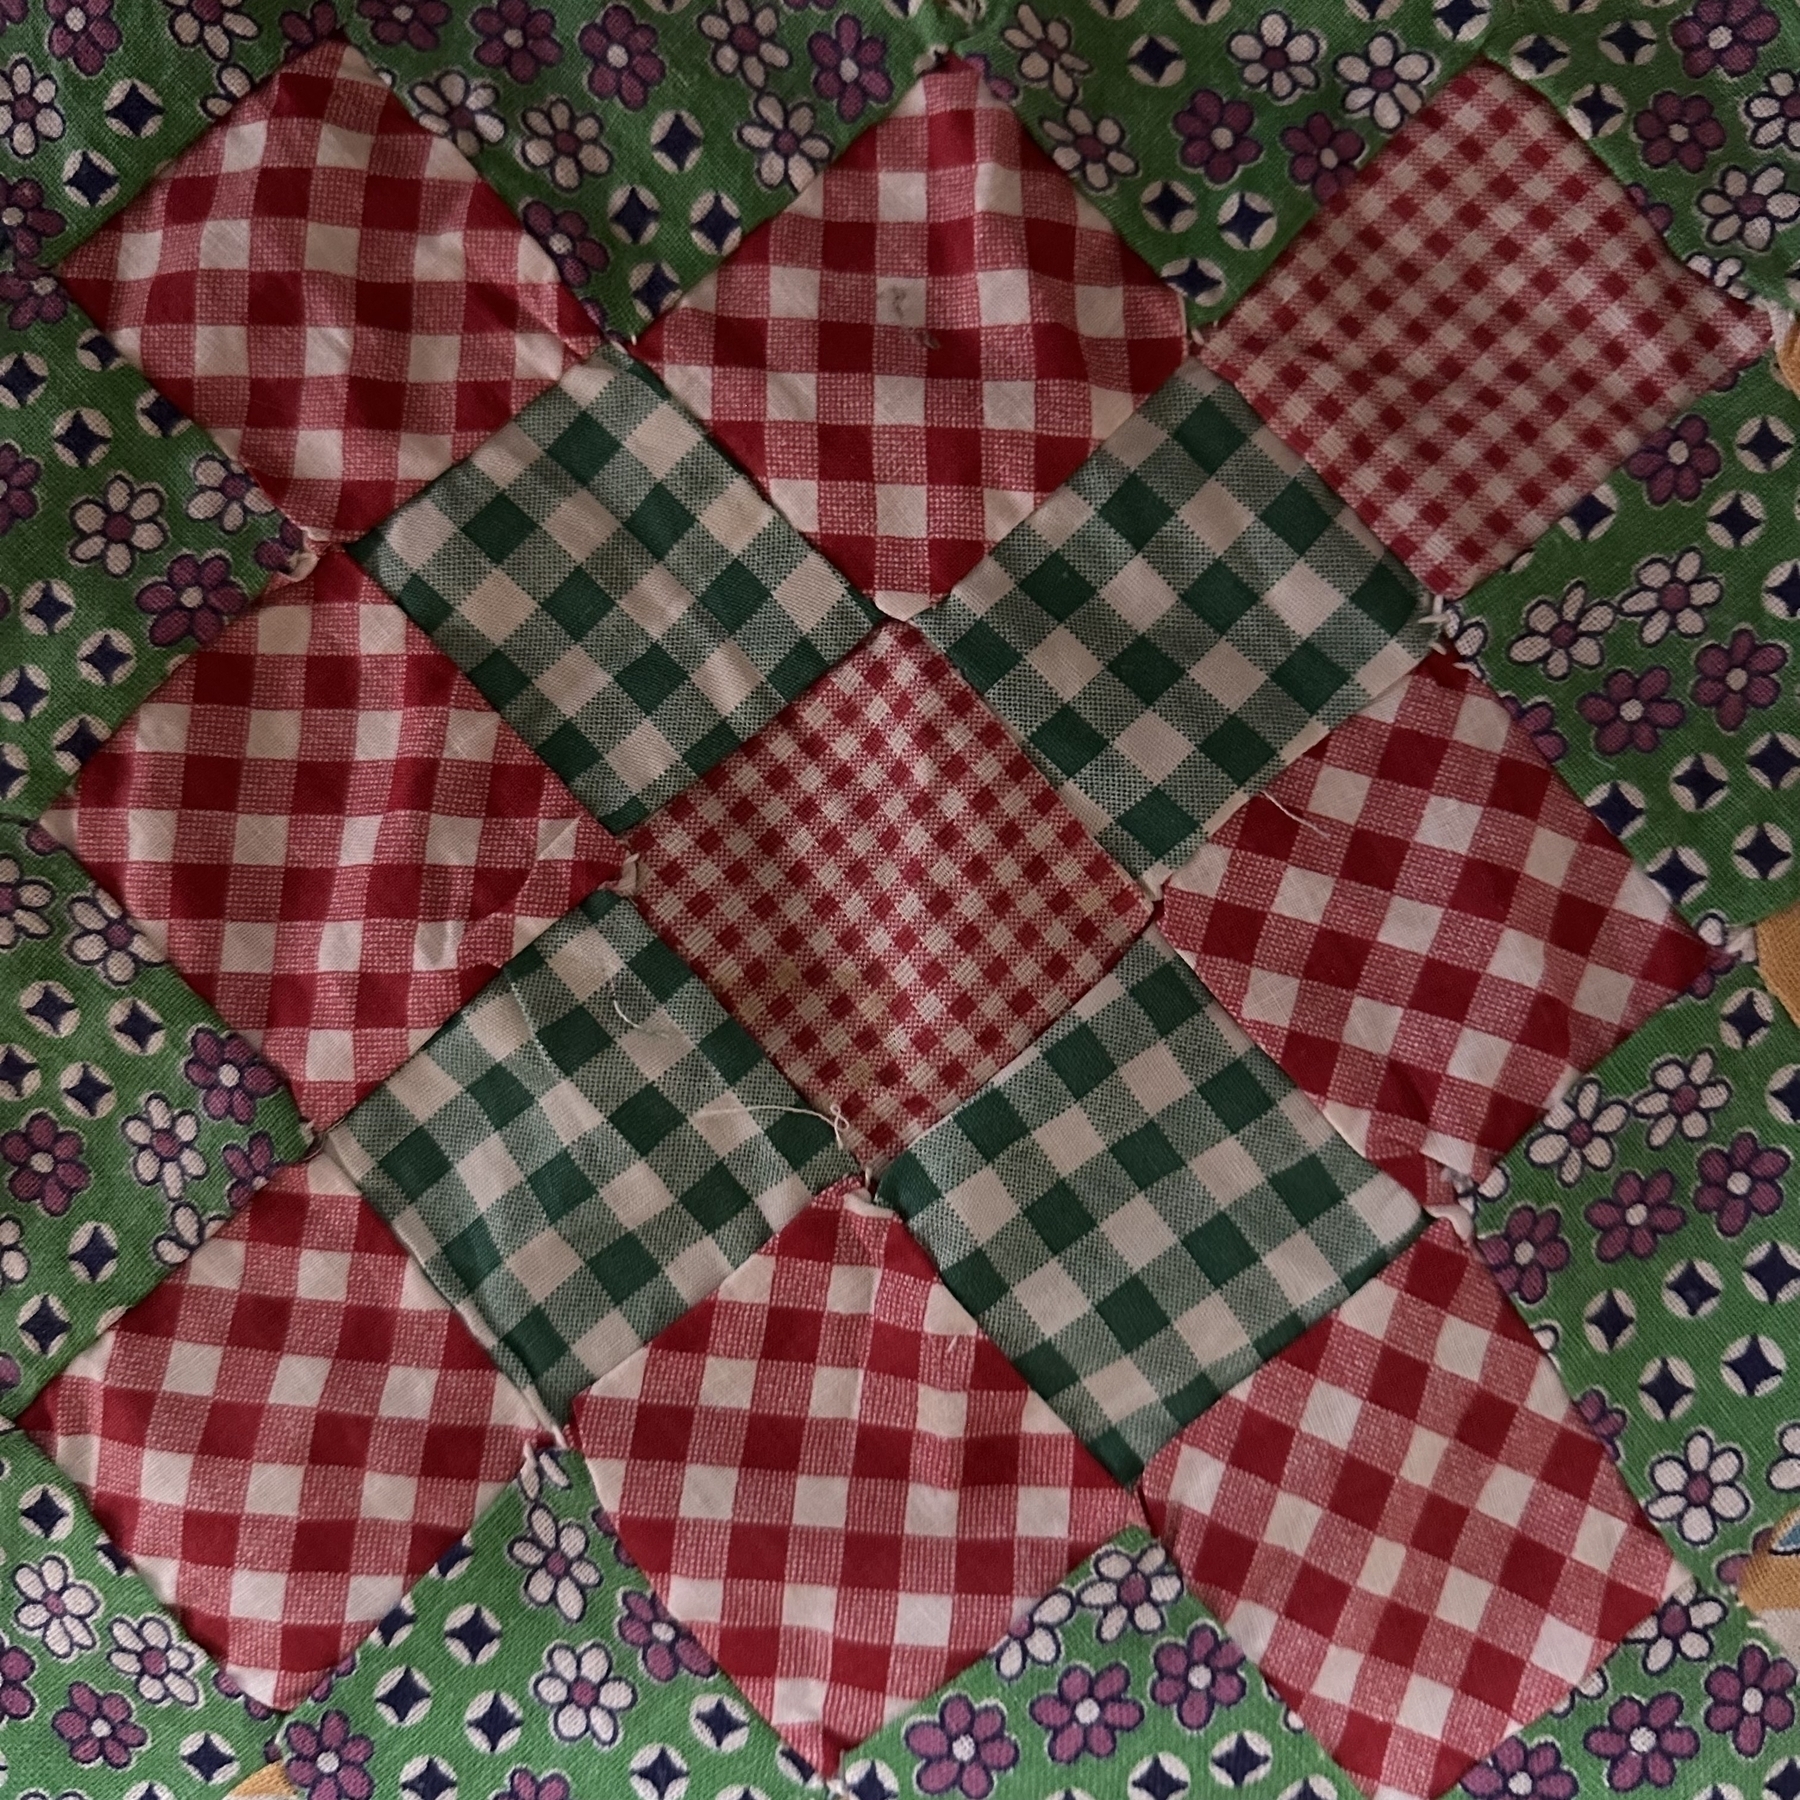 Moms hand sewn patchwork quilt piece.